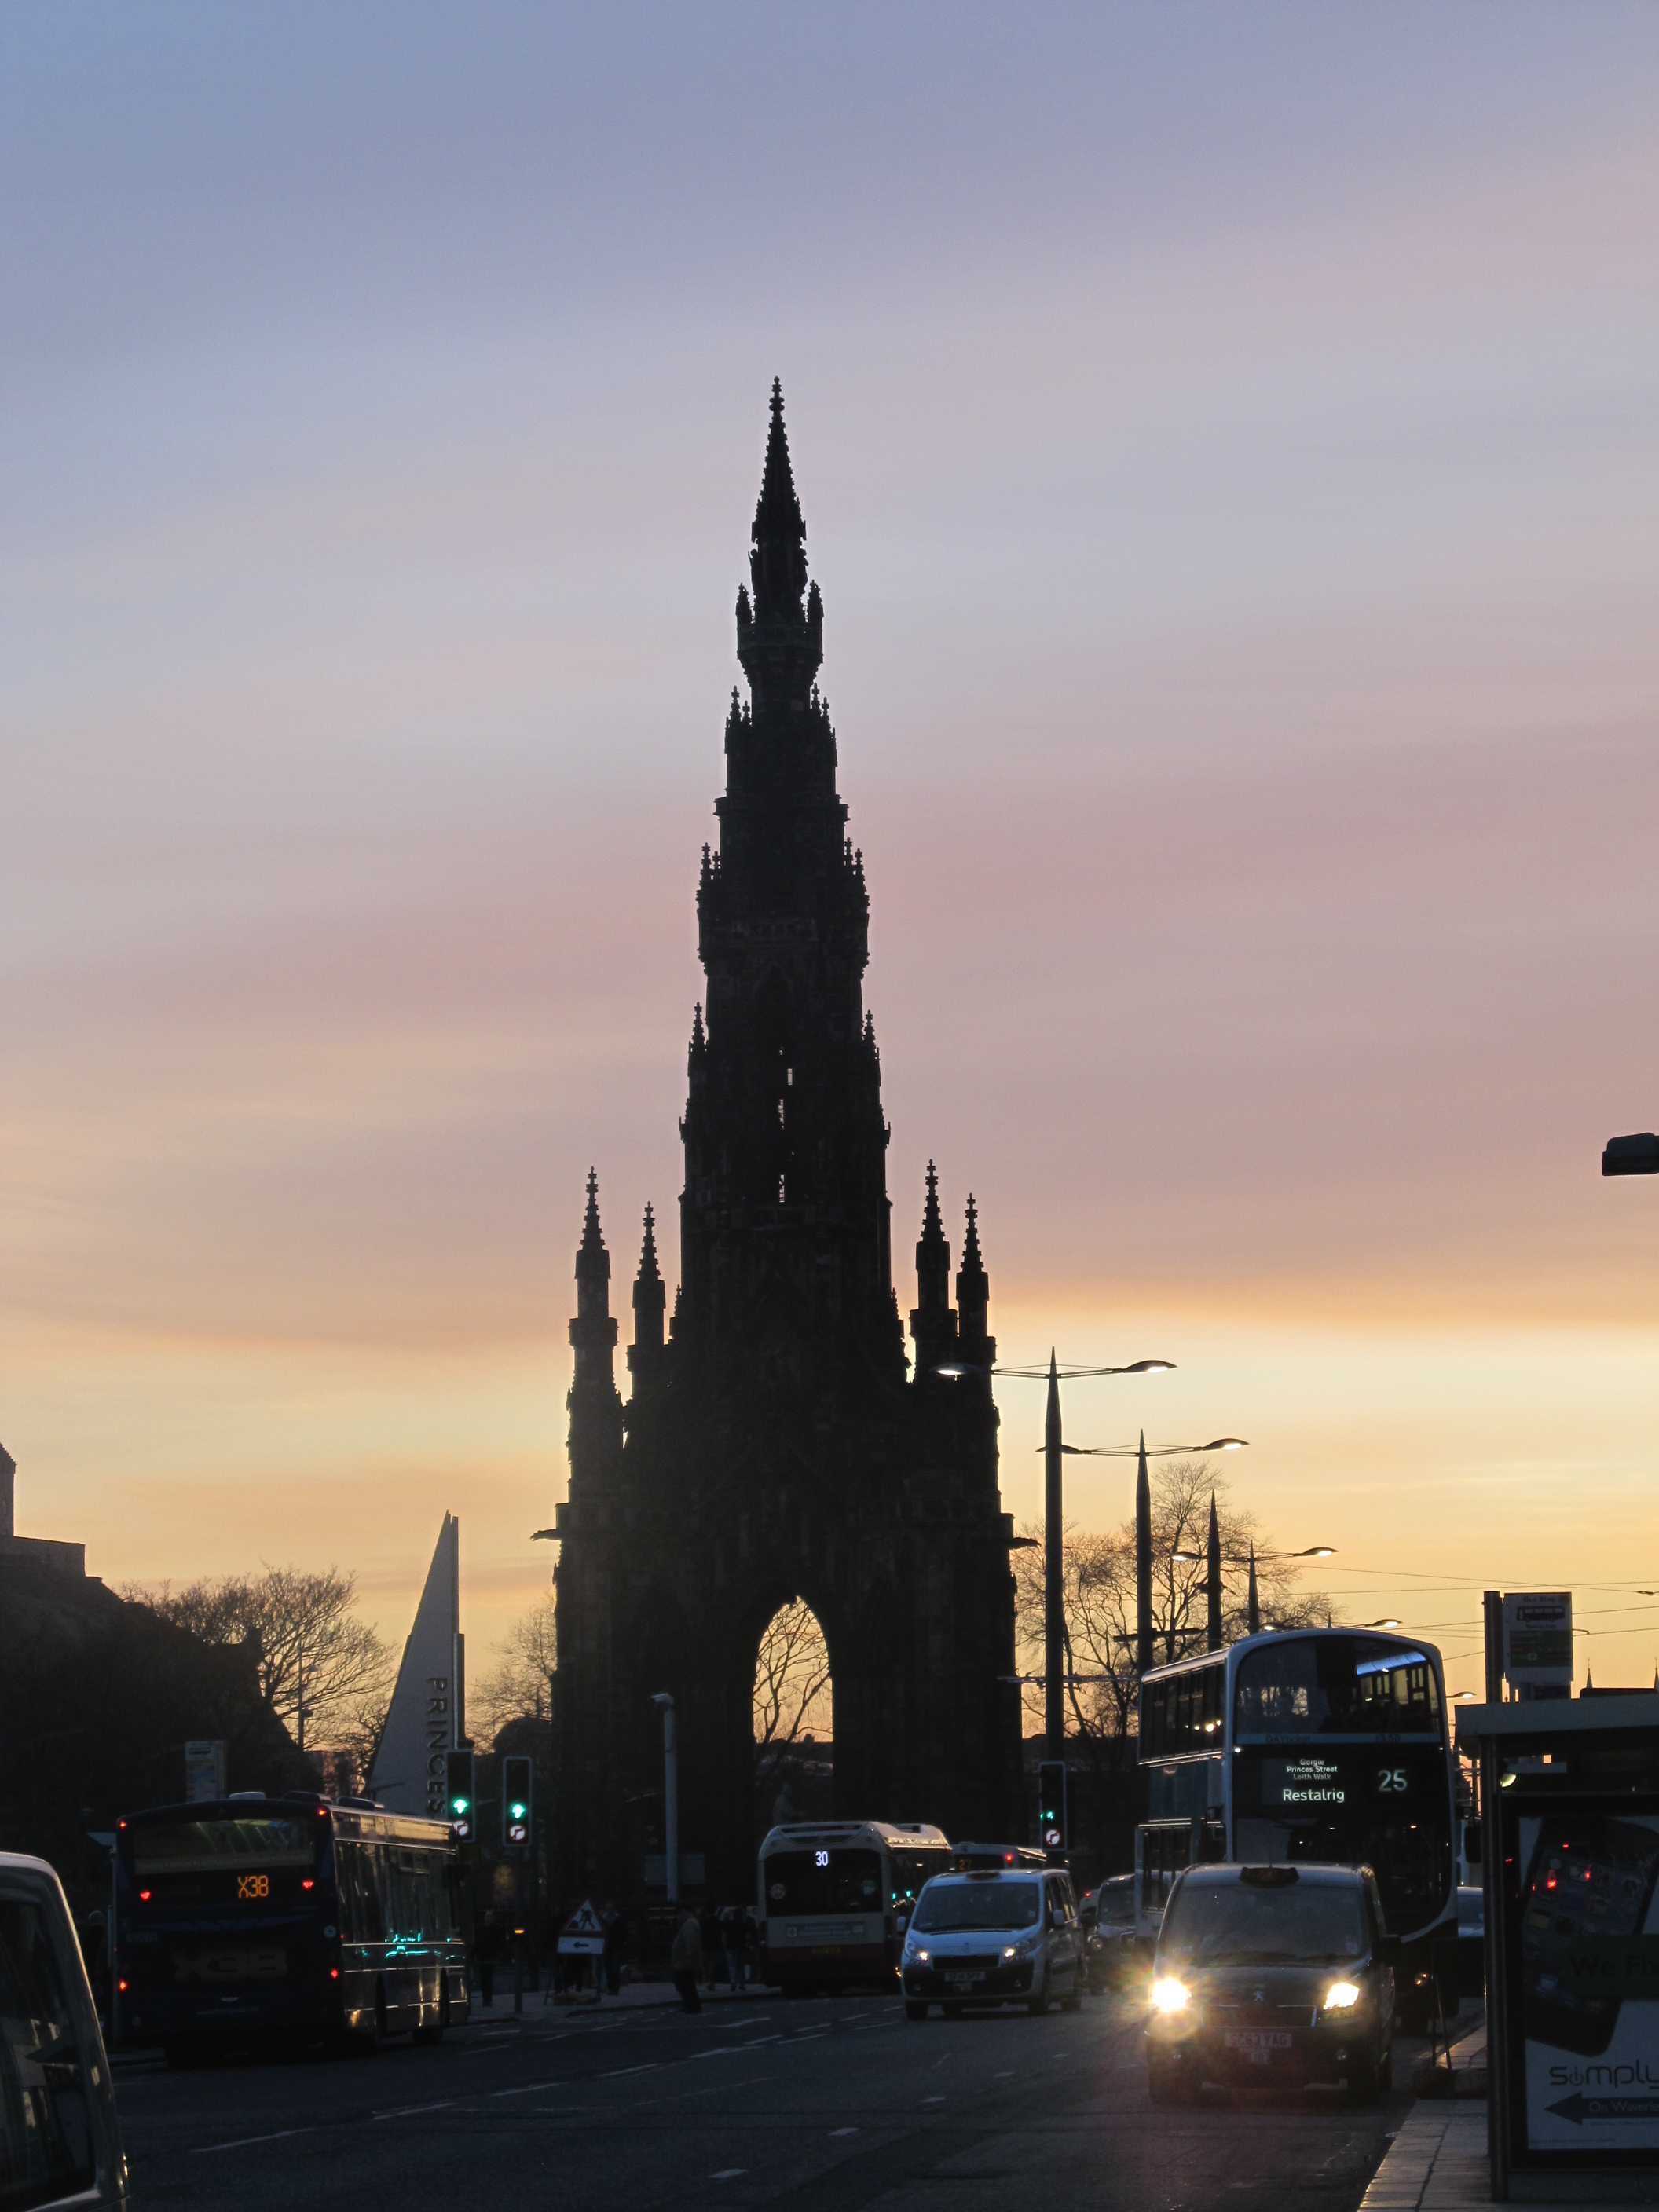 The Victorian Gothic Monument in Edinburgh